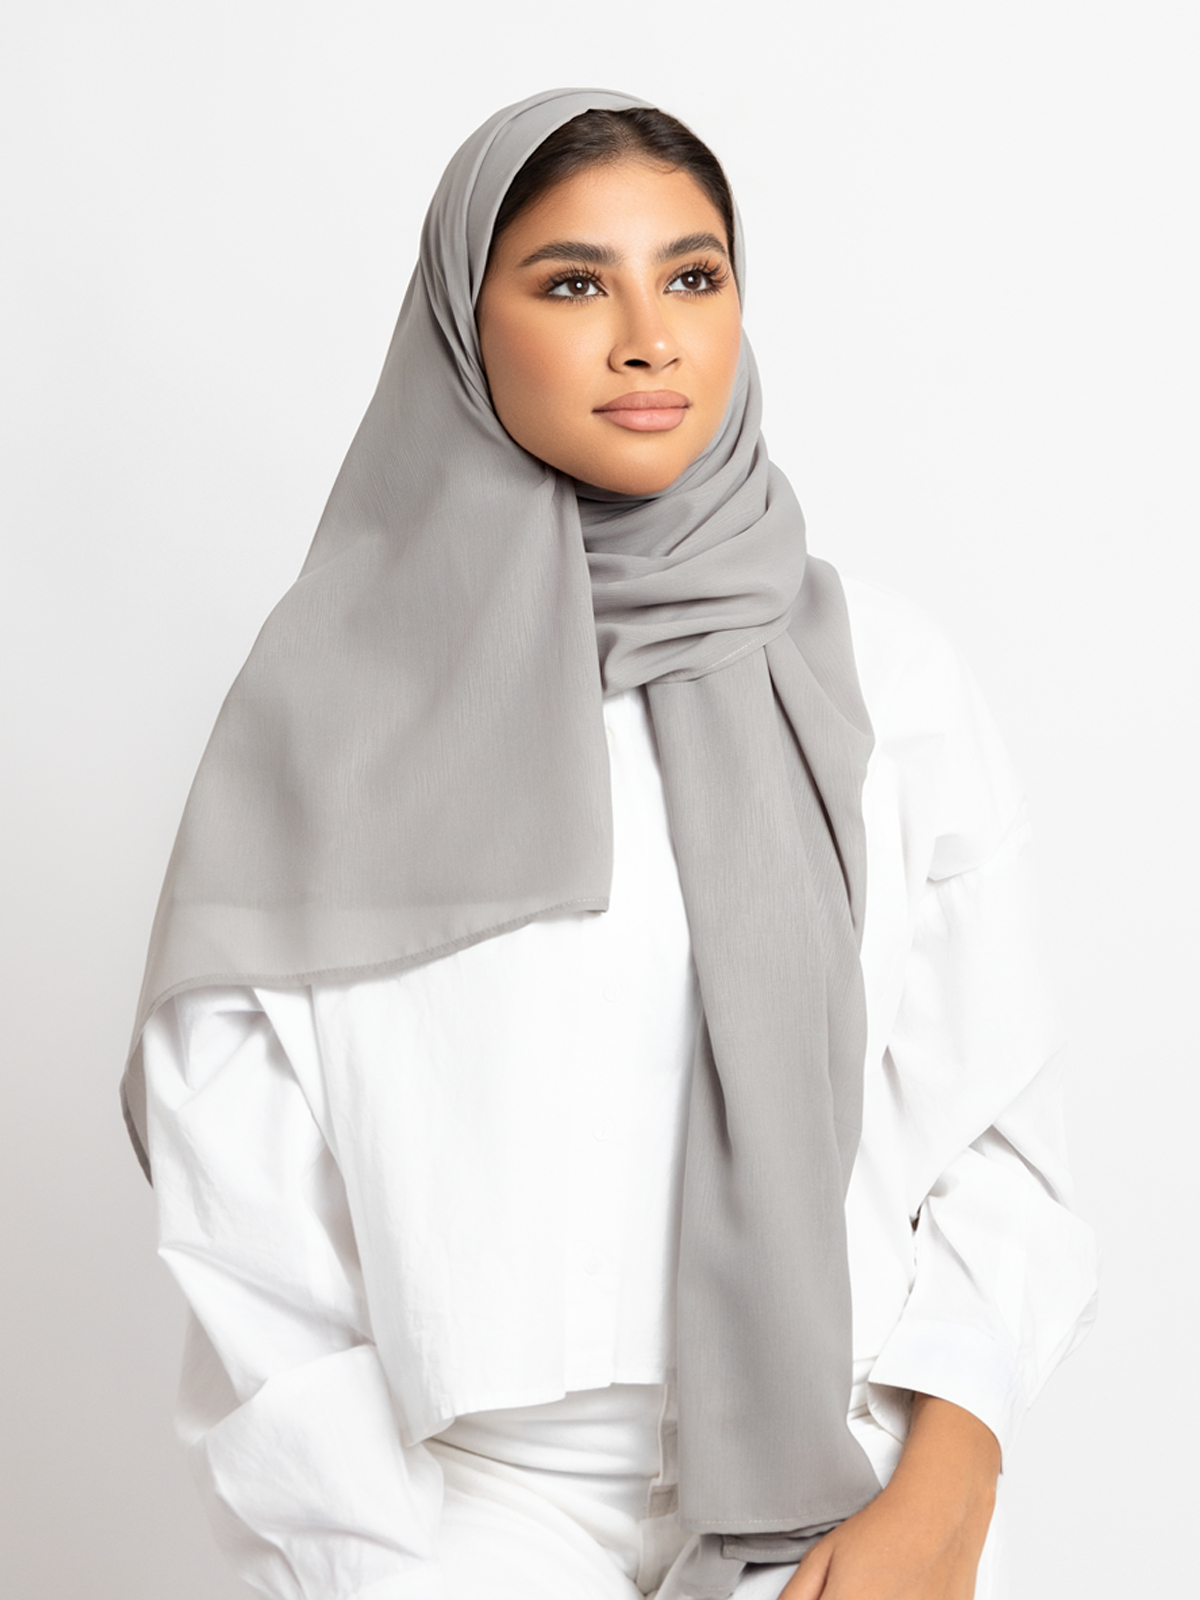 Luxurious chiffon hijab plain tarha 200 cm long green color high quality material online in ksa by kaafmeem